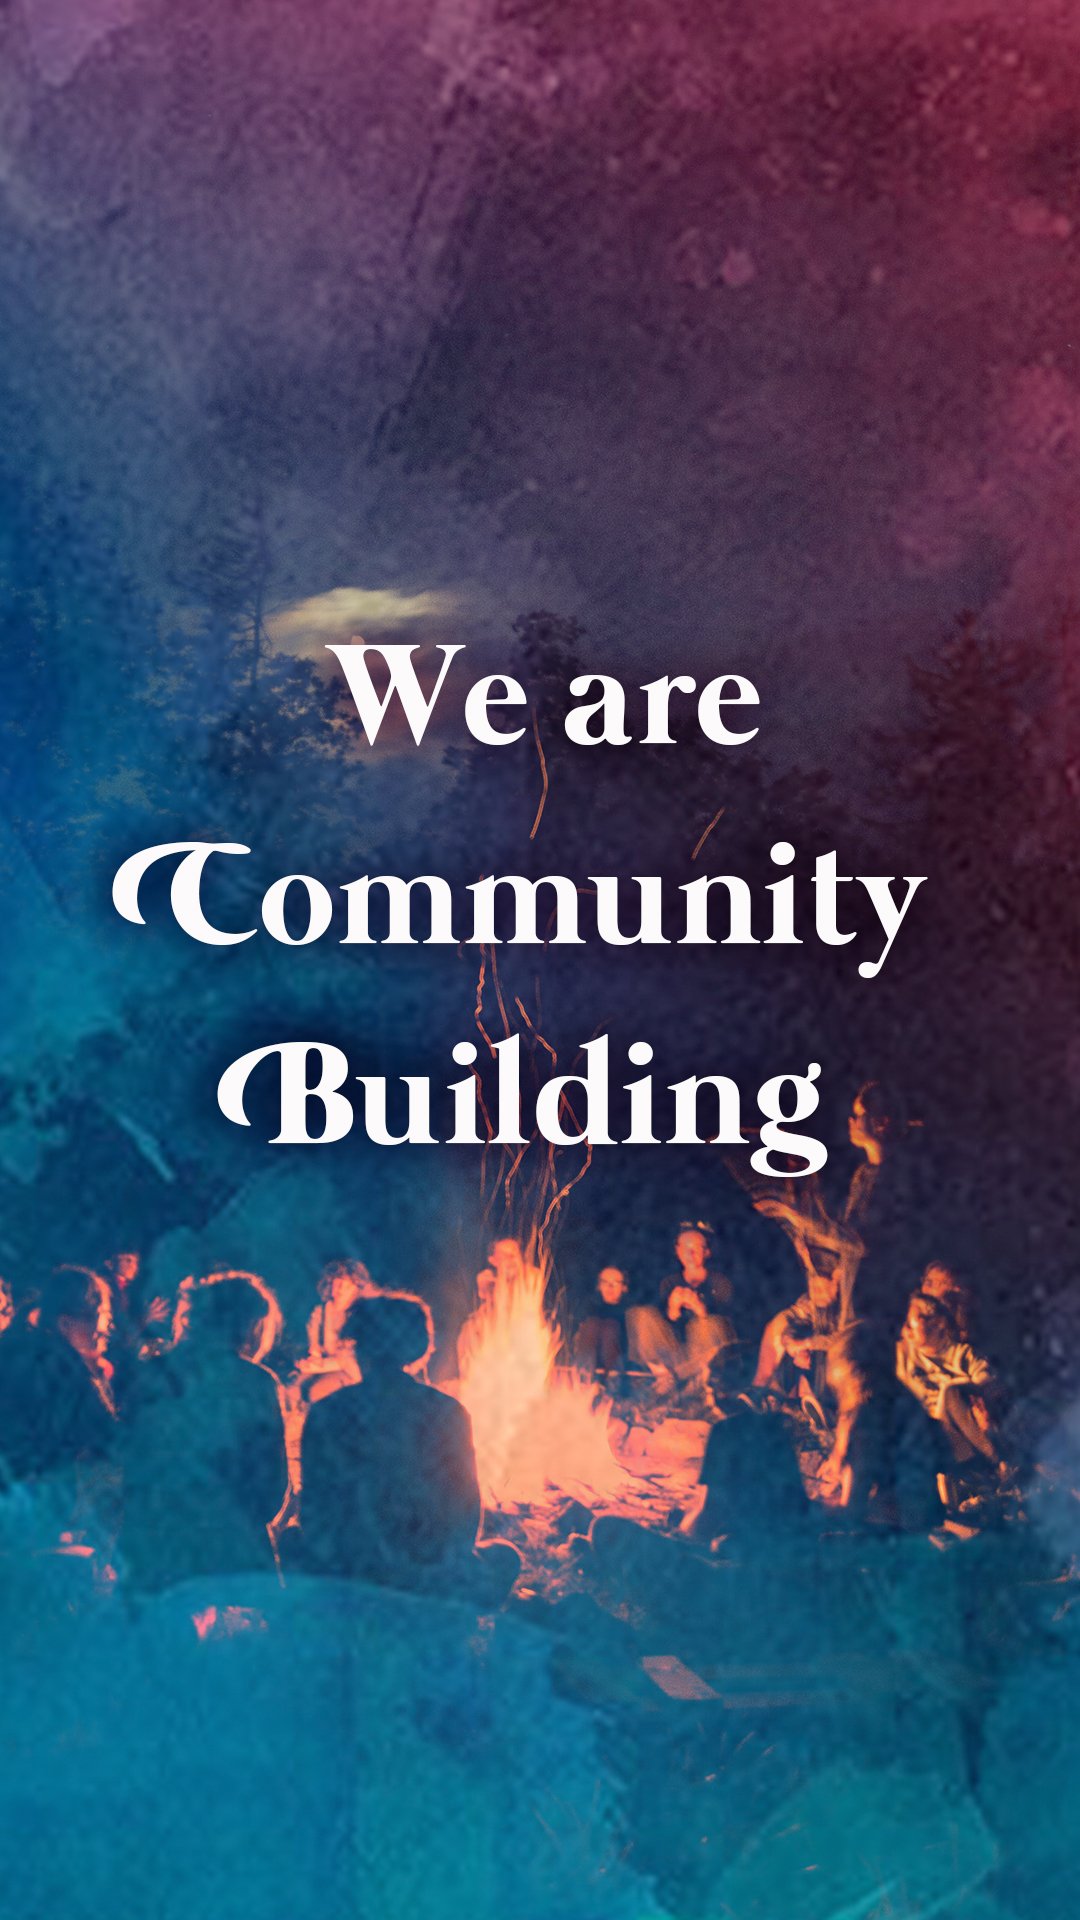 WAWD Community Building Wallpaper.jpg